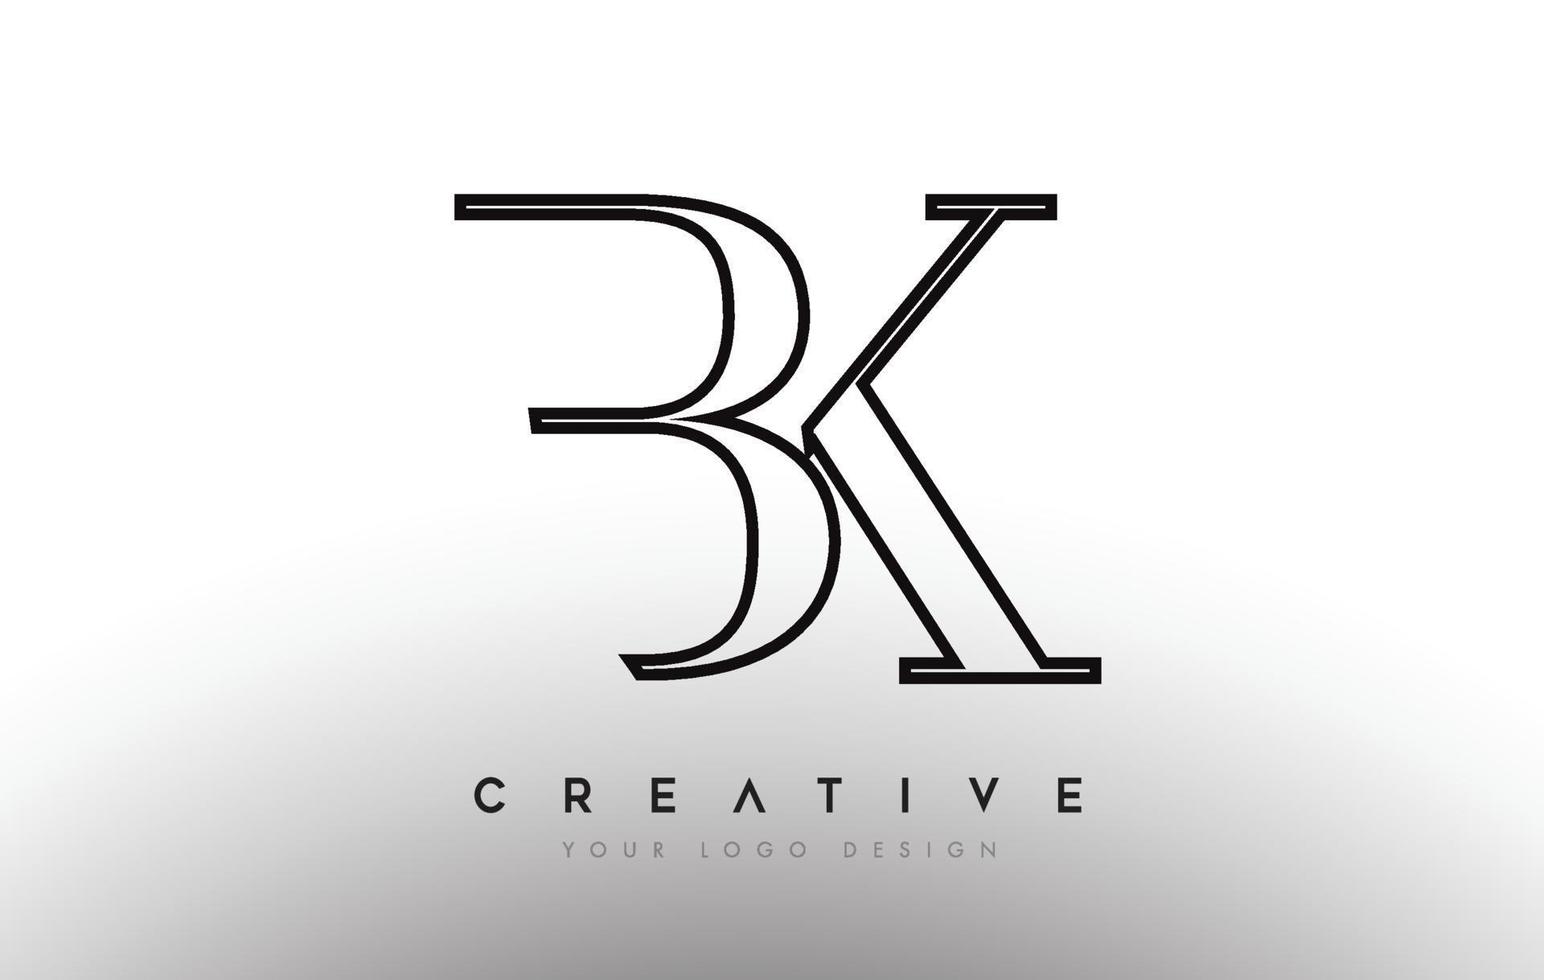 bk bk brief ontwerp logo logo pictogram concept met serif-lettertype en klassieke elegante stijl look vector